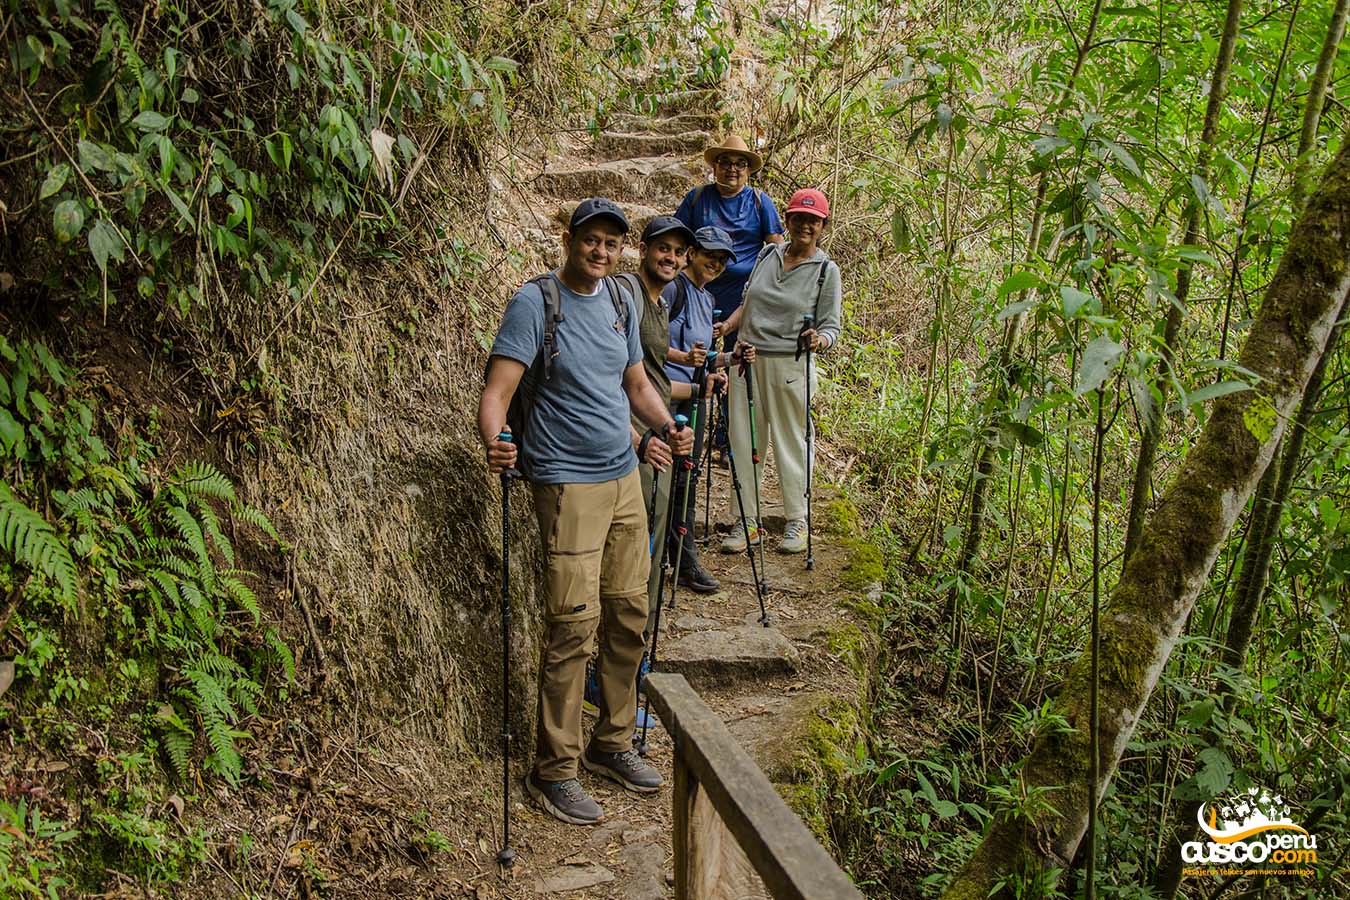 Family on the Inca Trail. Source: CuscoPeru.com